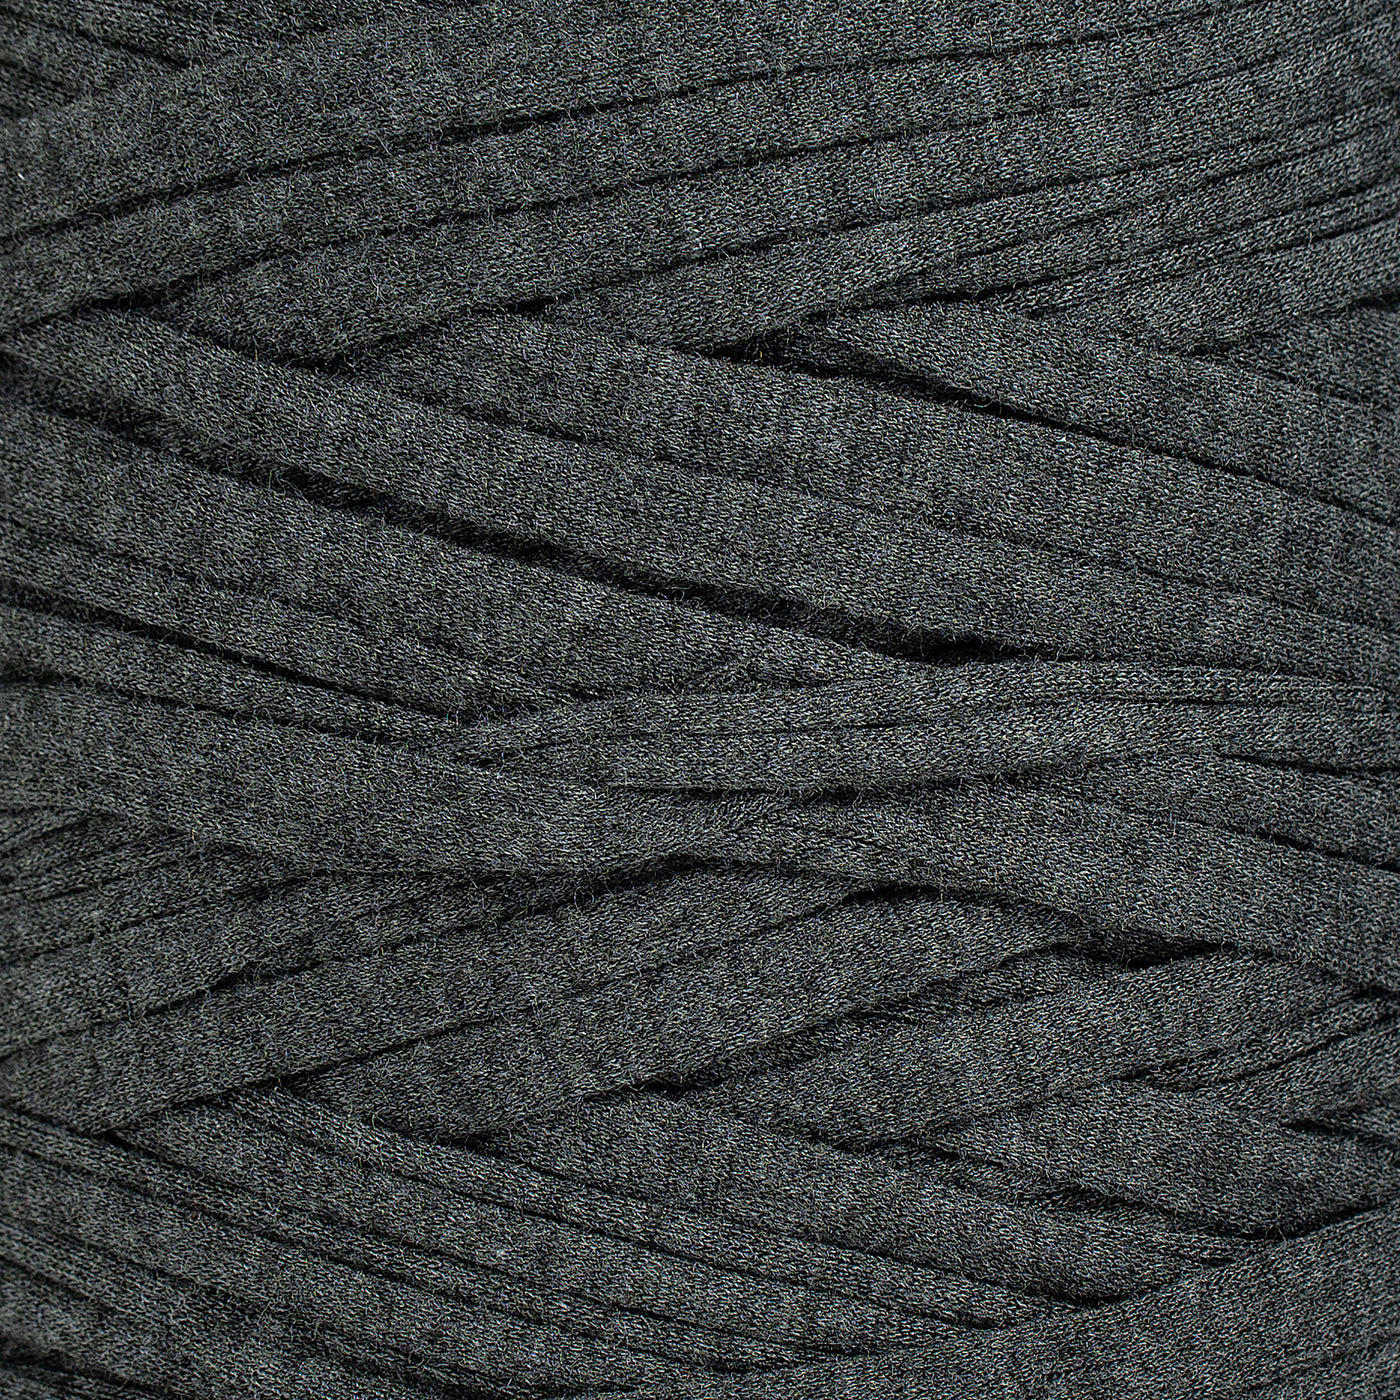 Recycled T-Shirt Fabric Yarn - Dark Heather Gray Color